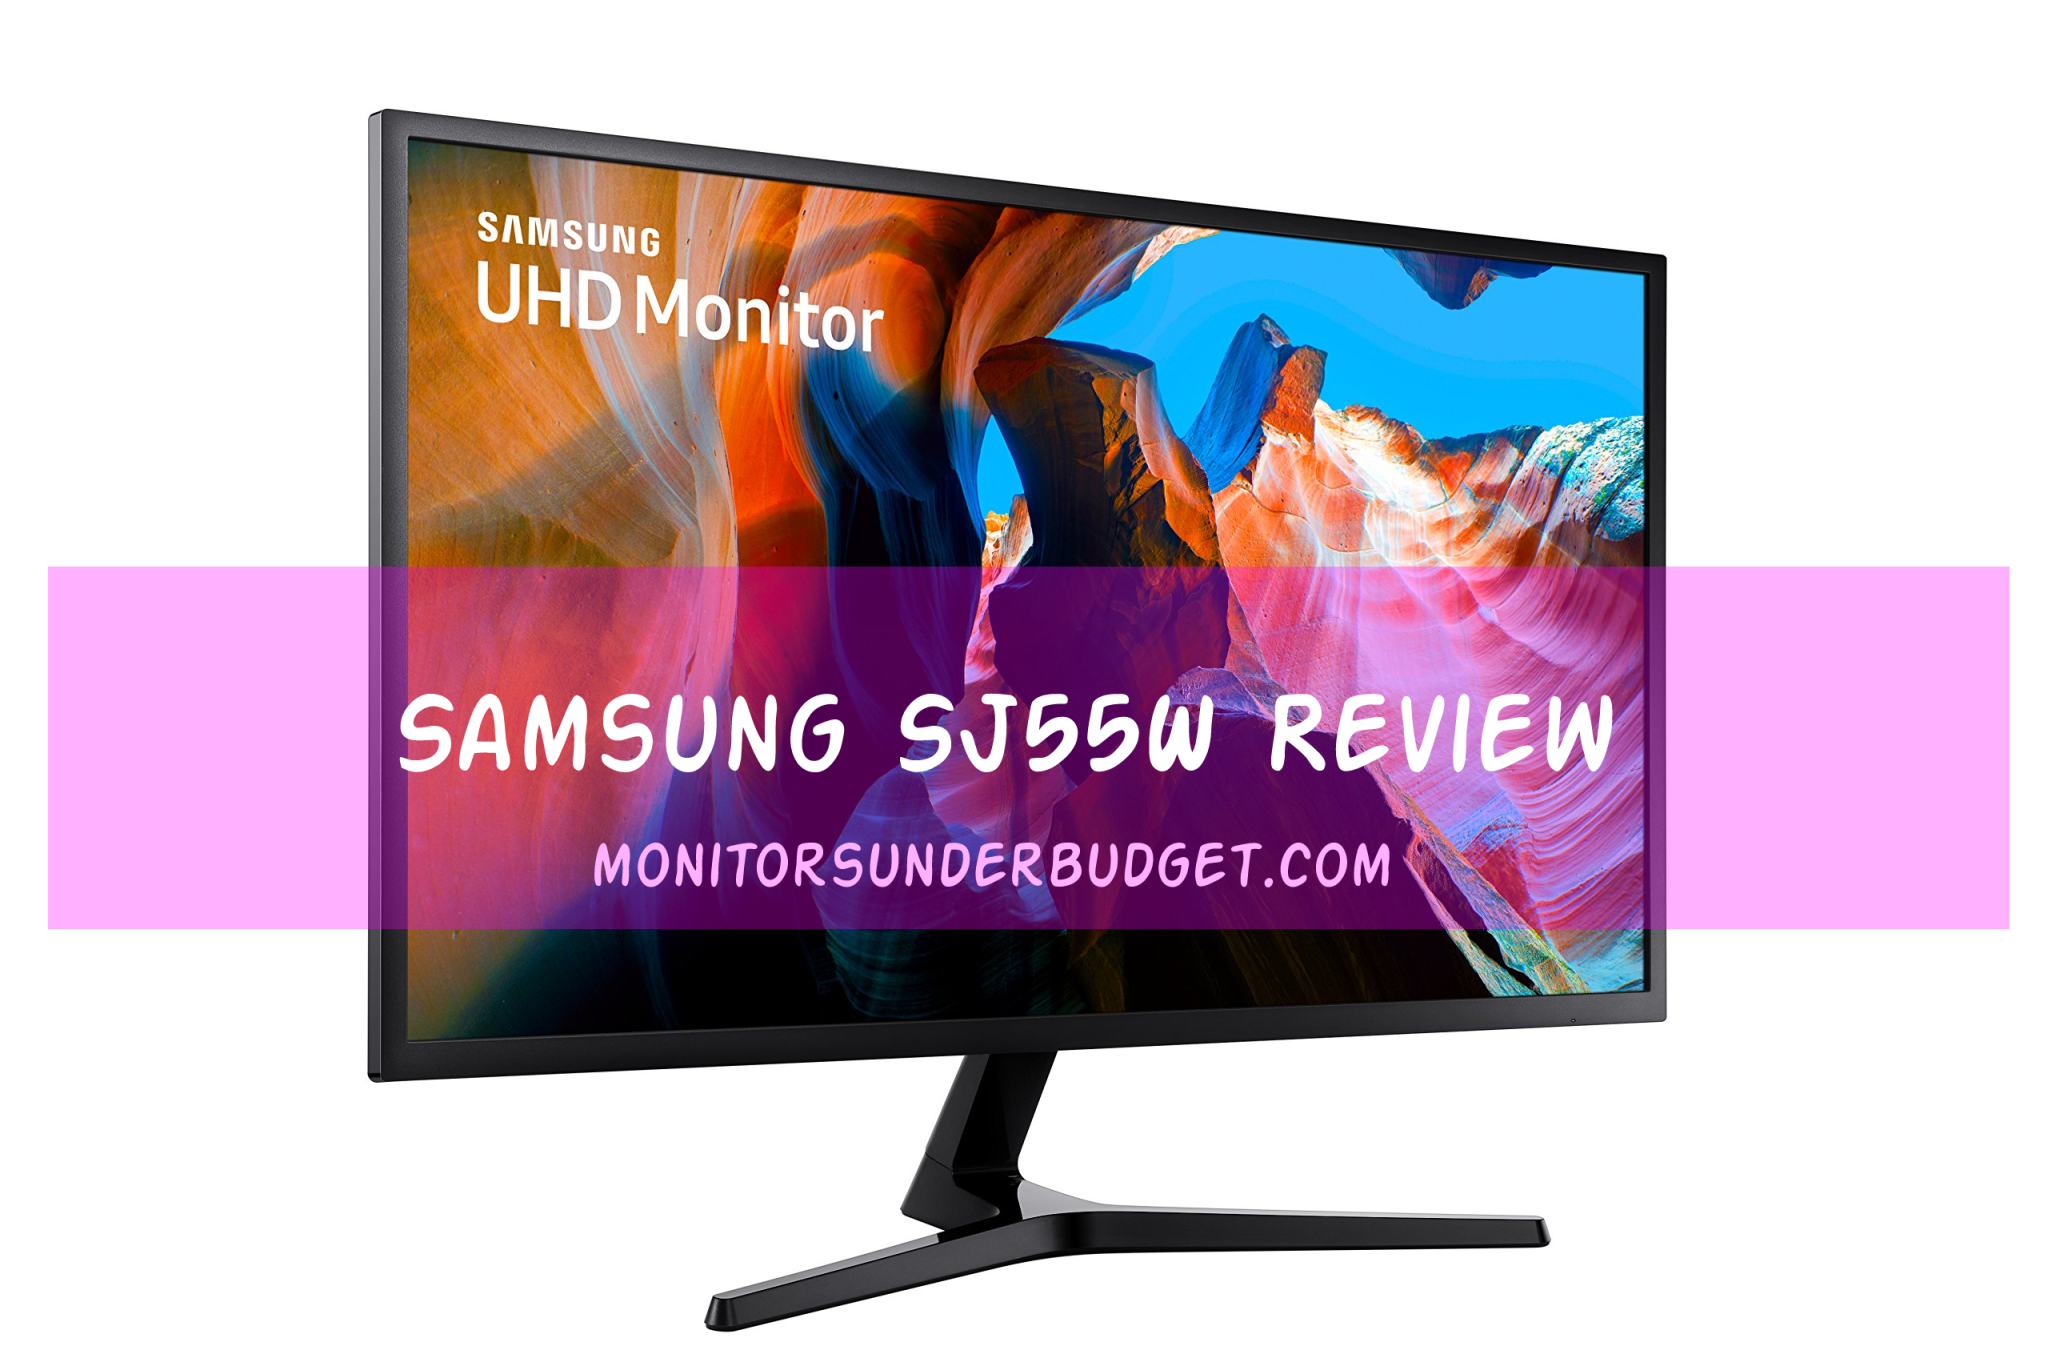 Samsung SJ55W Review